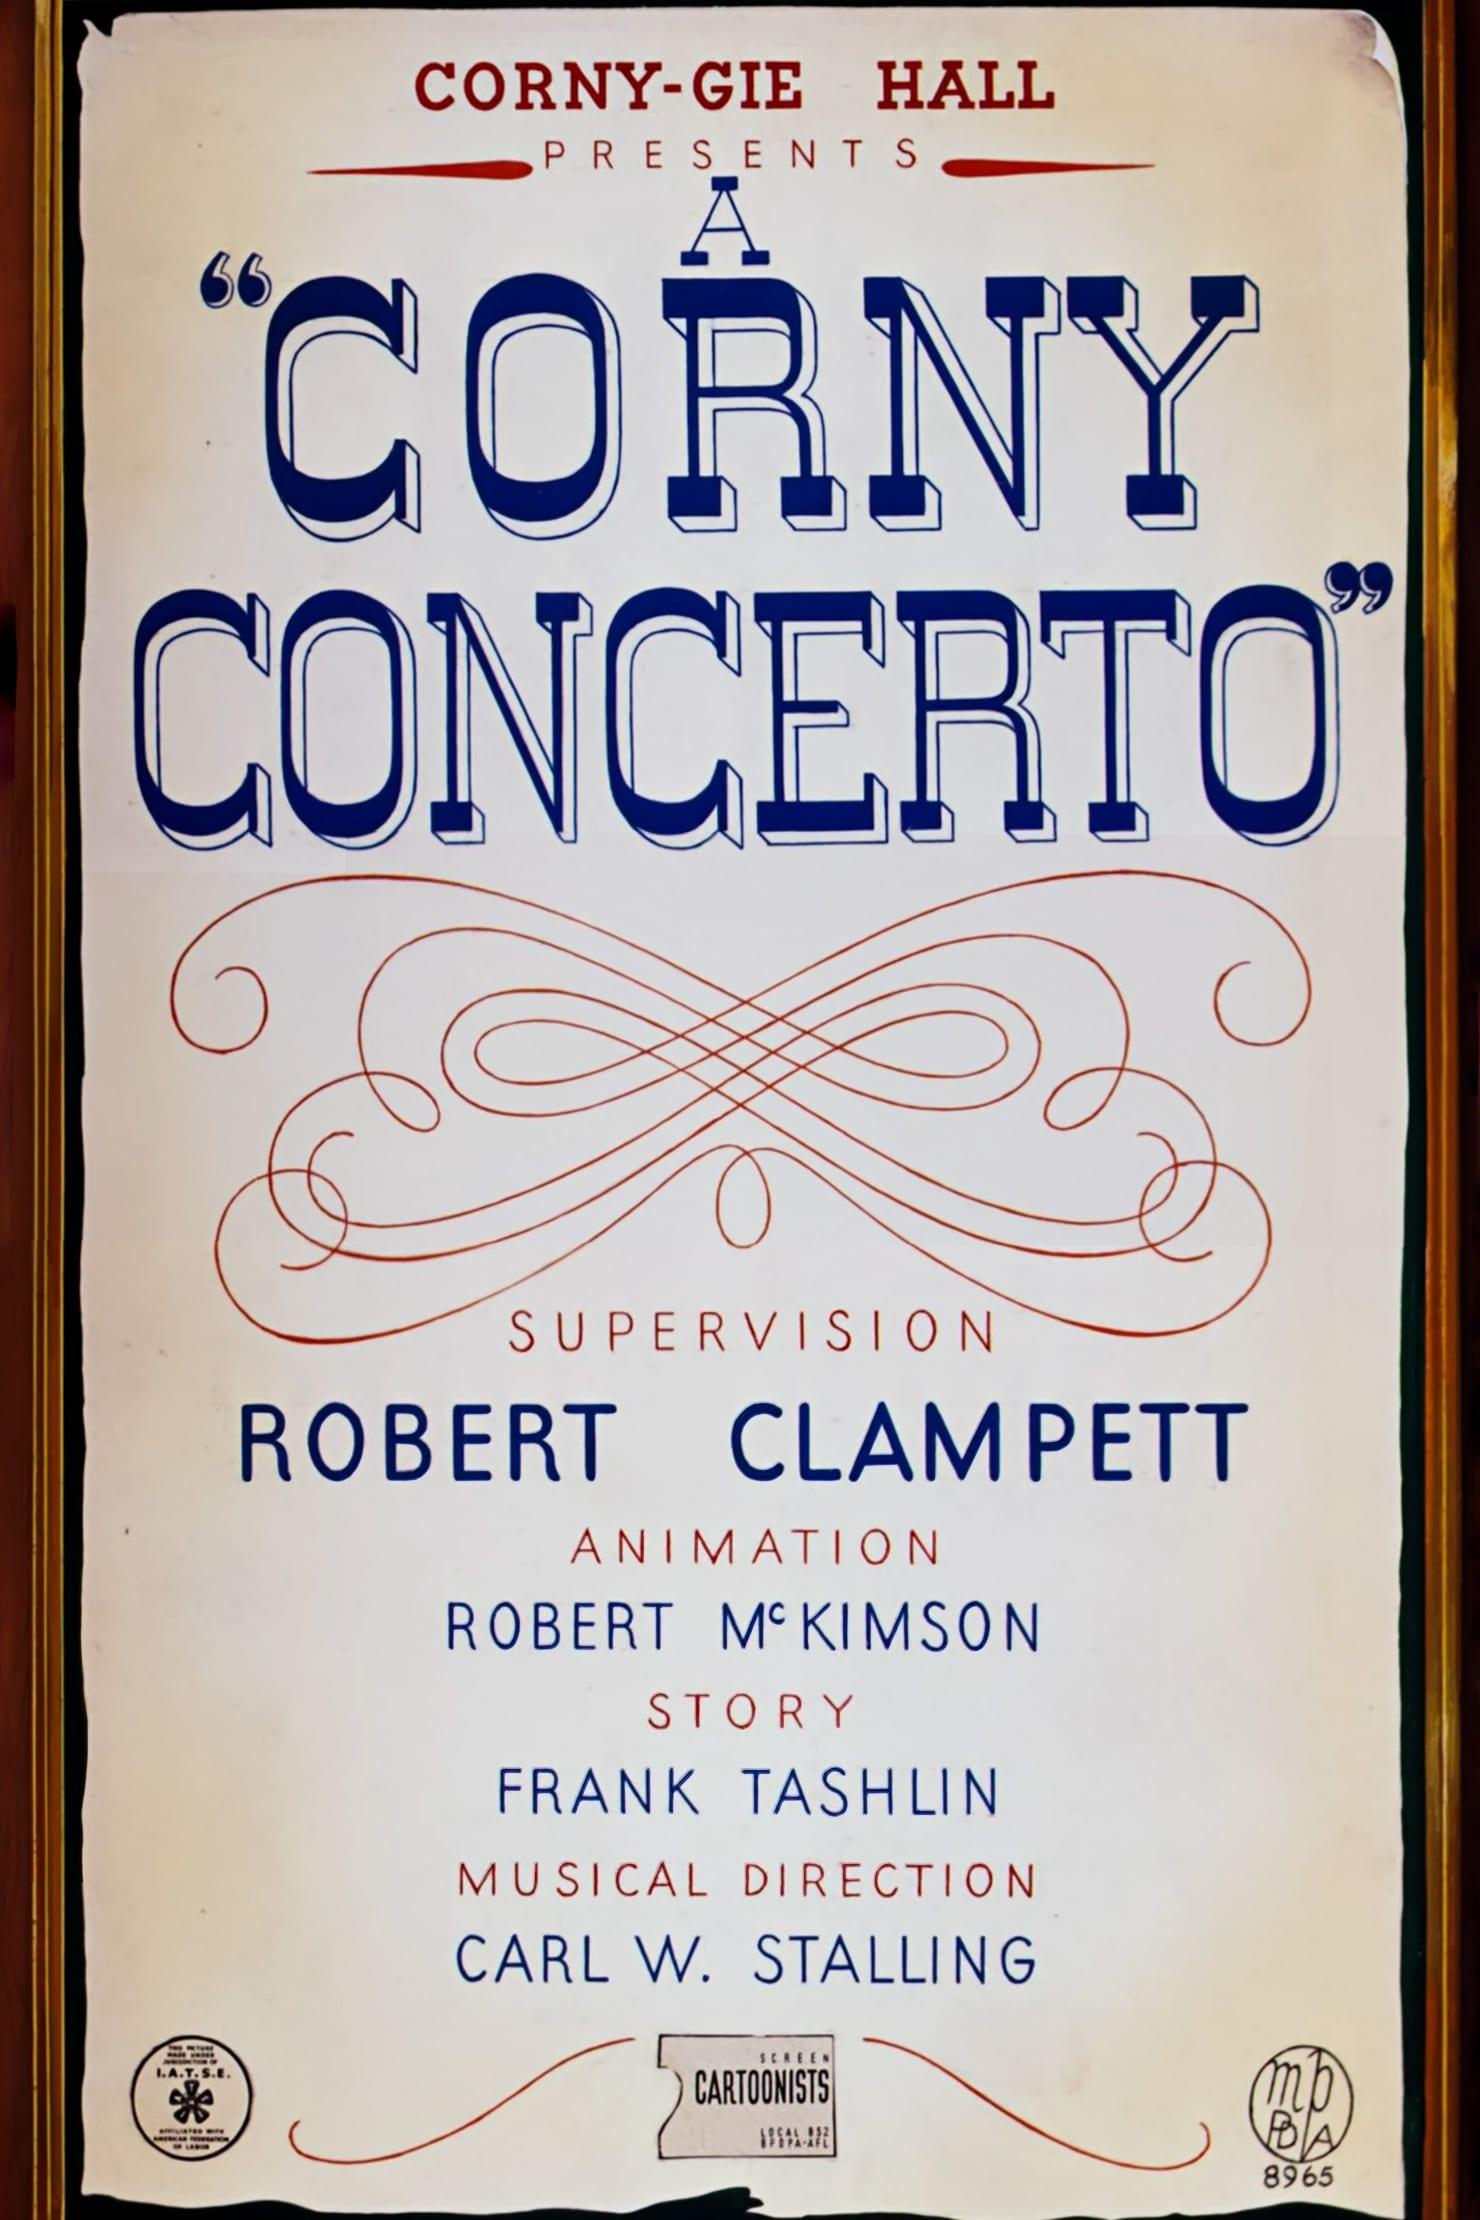 A Corny Concerto poster